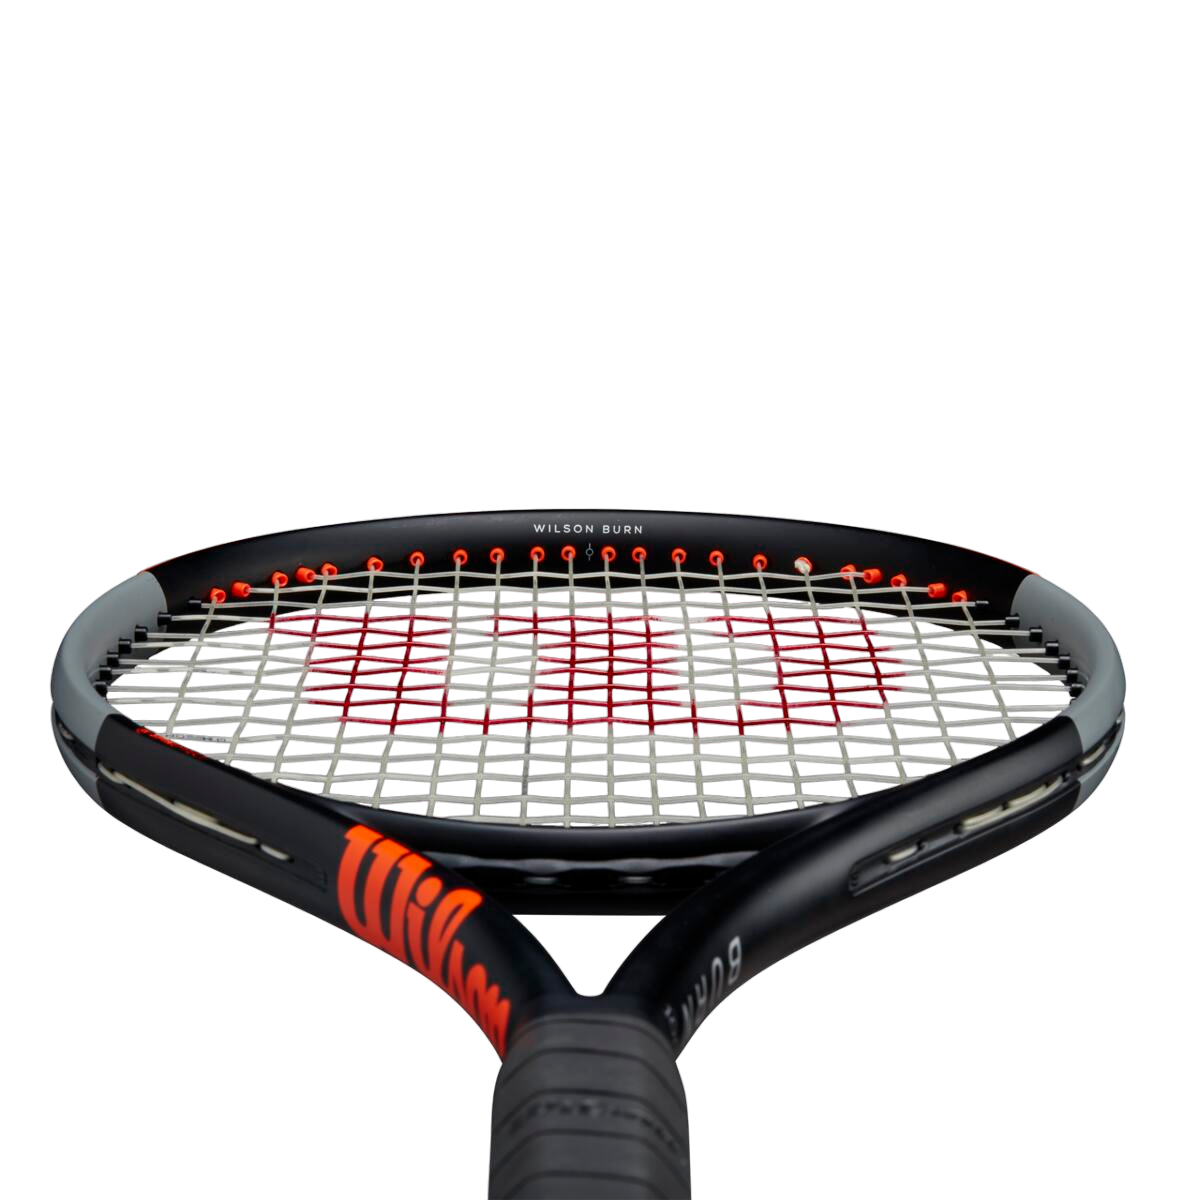 Burn 100LS V4 2021 Tennis Racquet